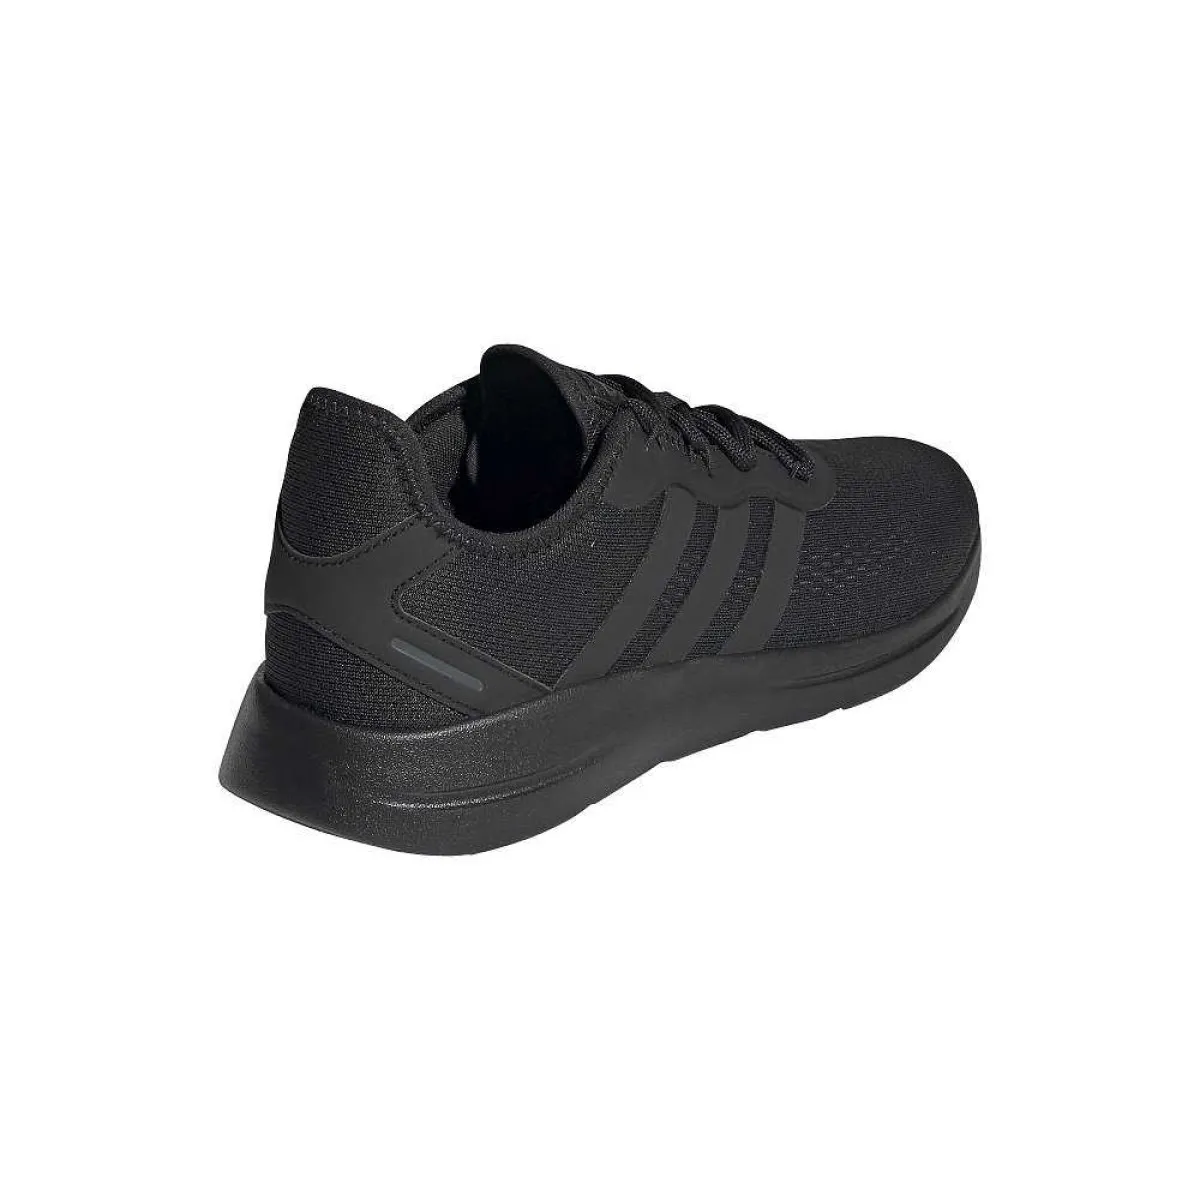 Zapatillas deportivas adidas Lite Racer negras